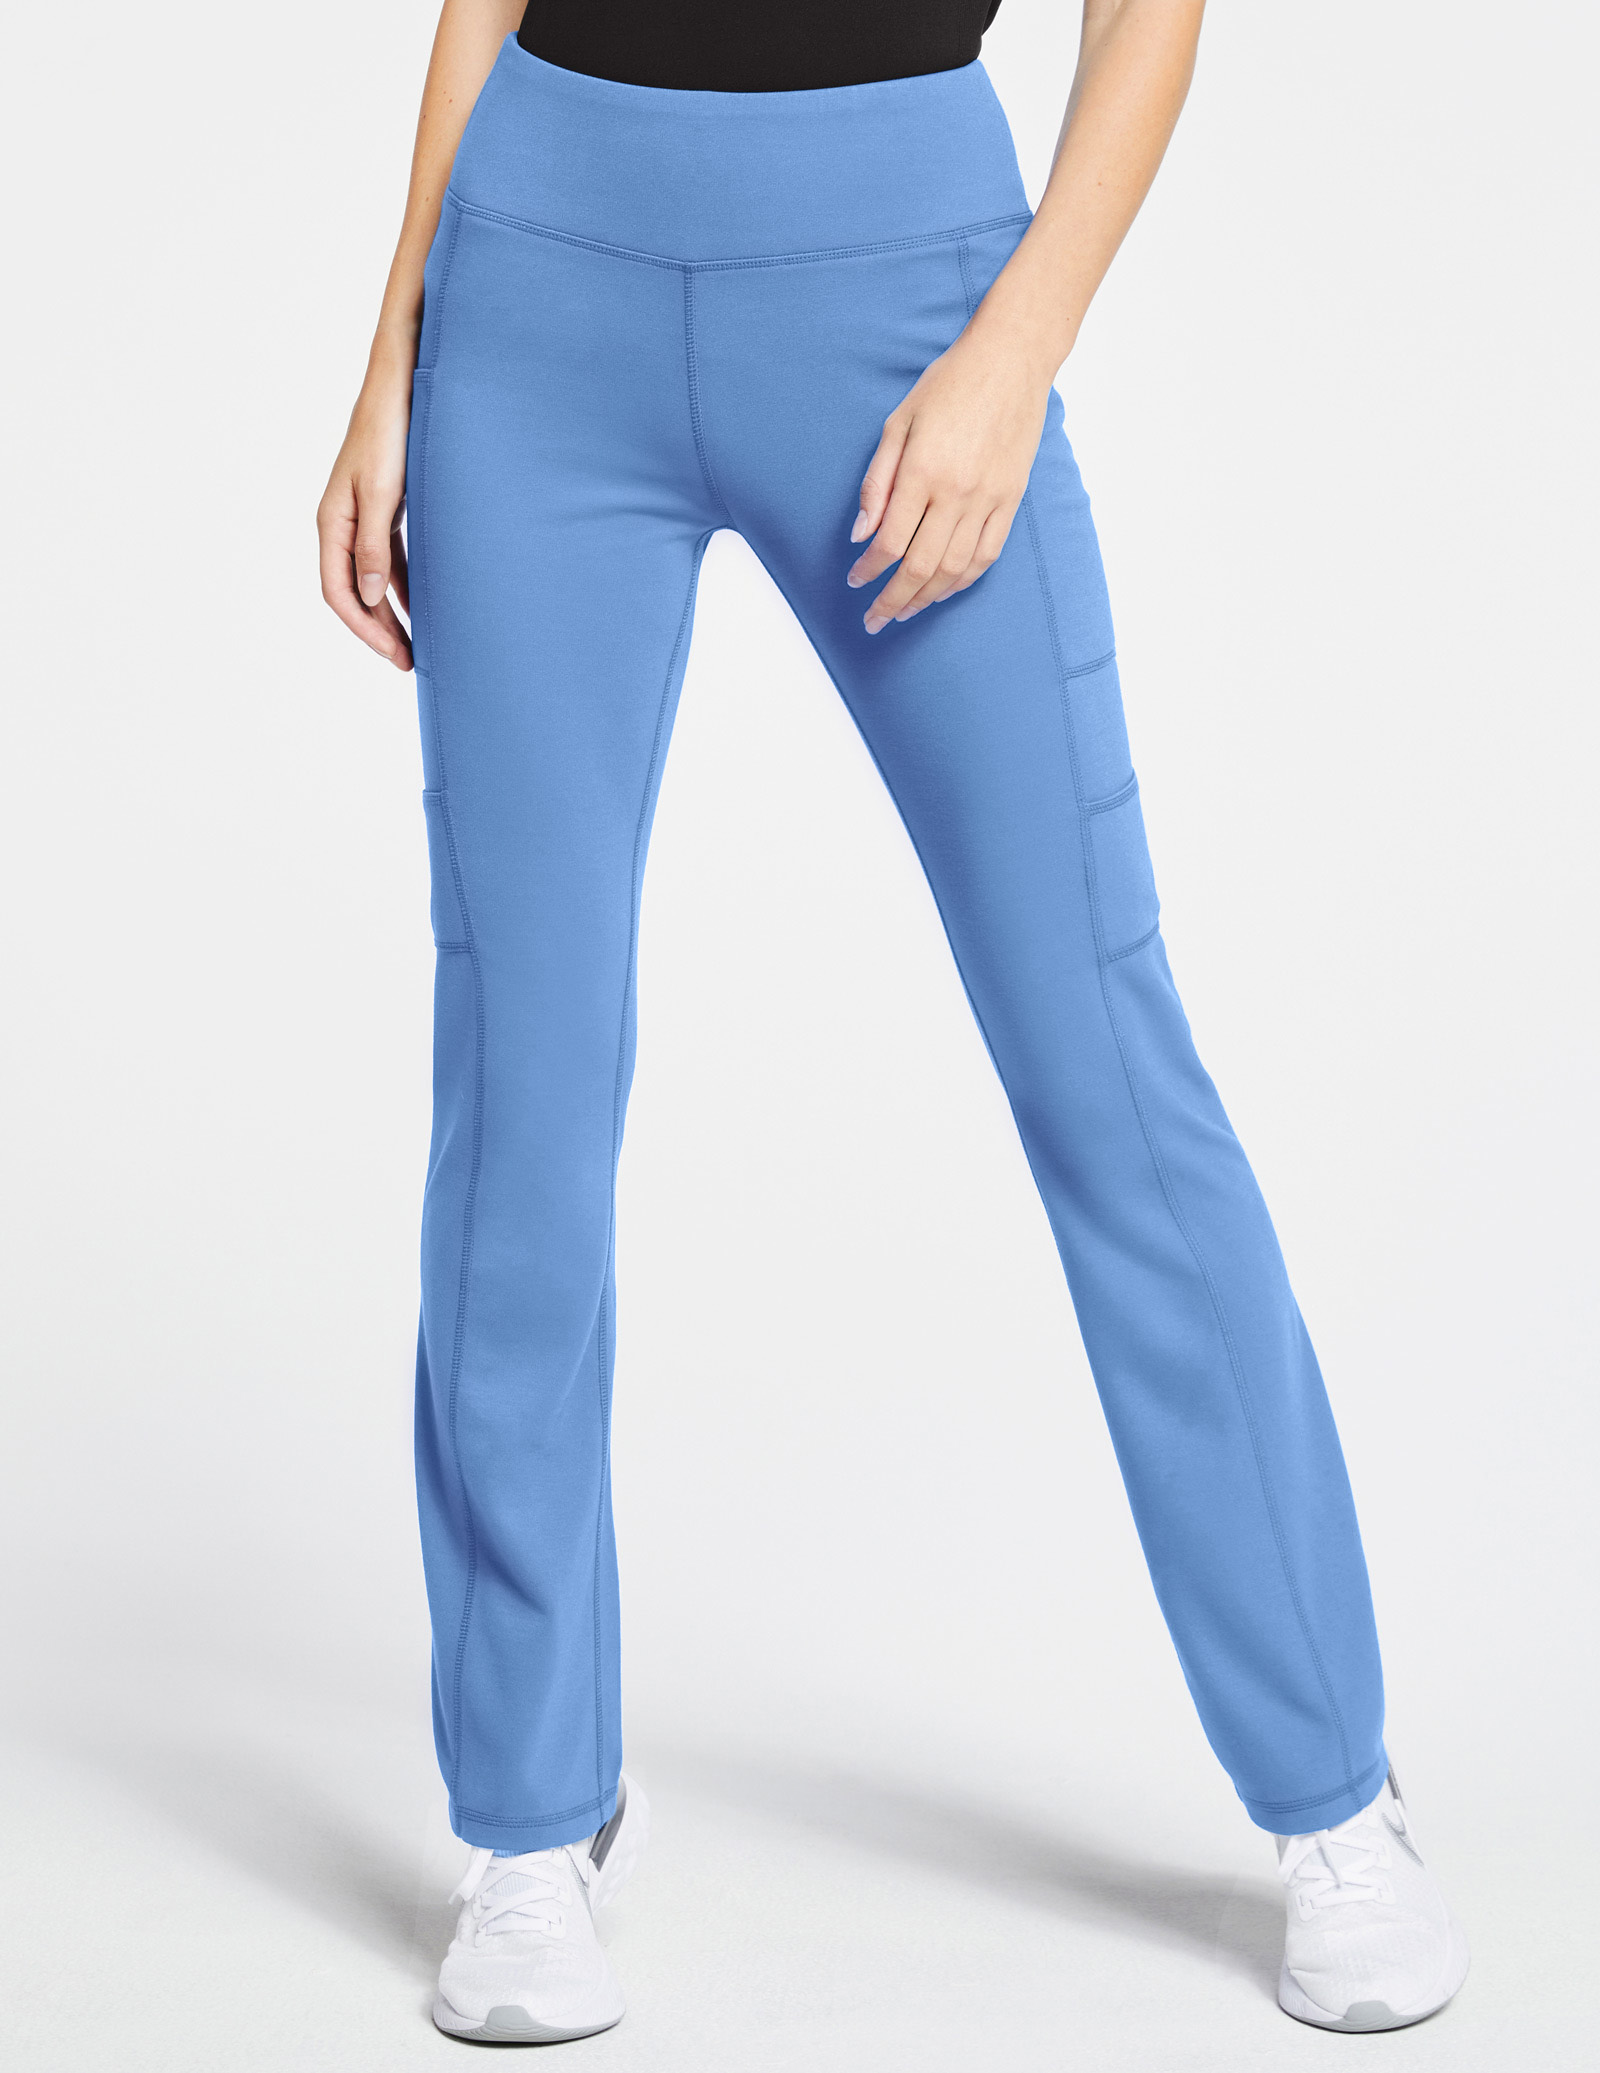 Women's Ceil Blue Scrub Pants | Jaanuu